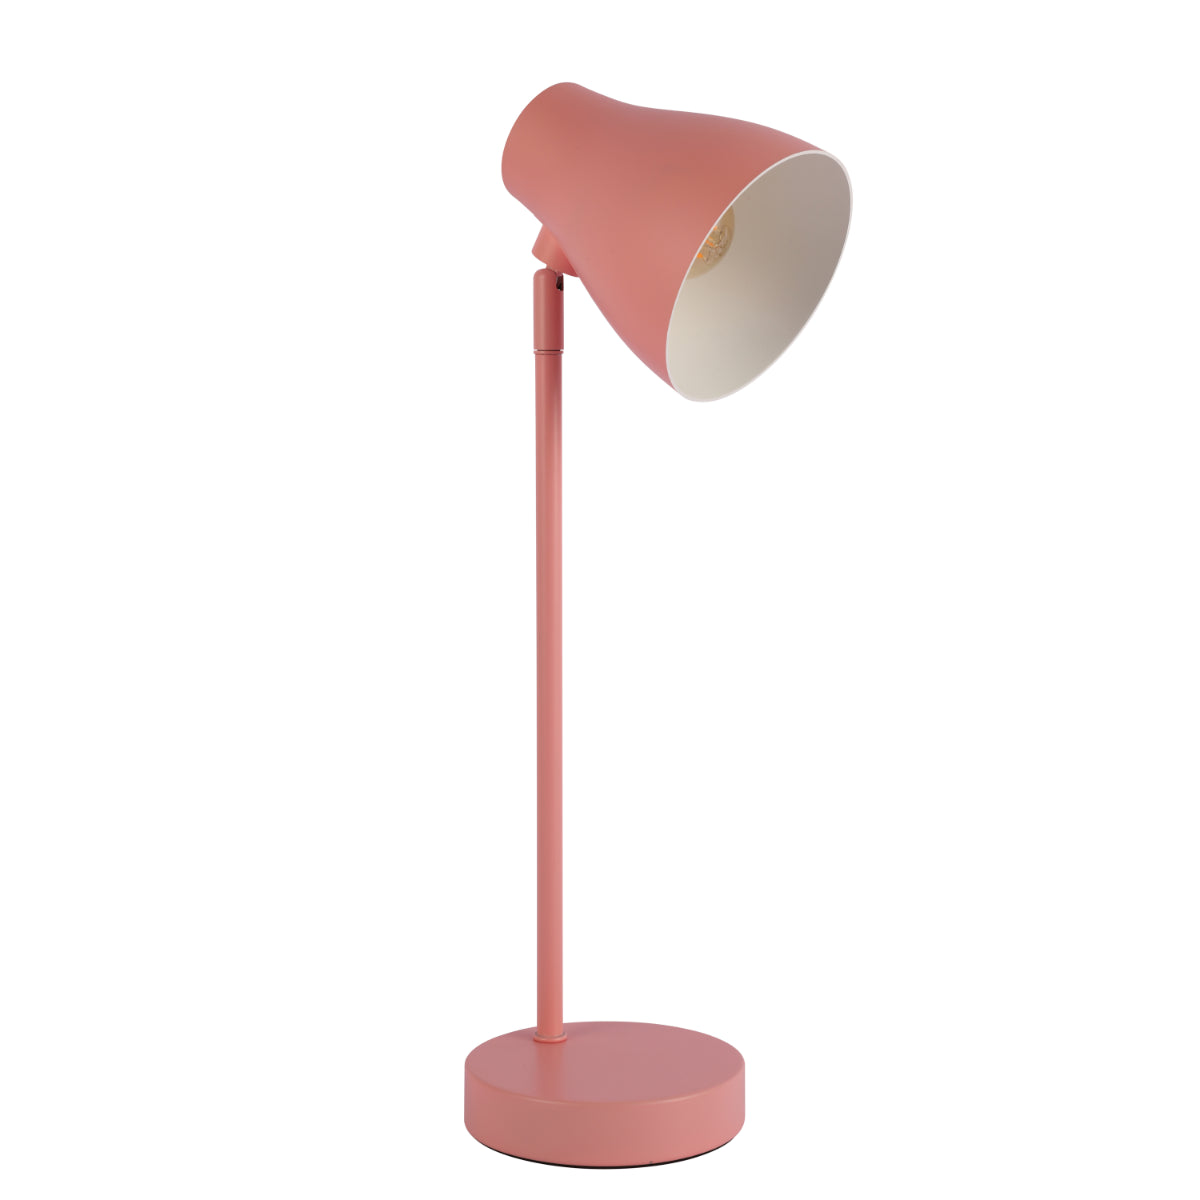 Main image of Elegant Rotatable Desk Lamp in Assorted Colors 130-03656